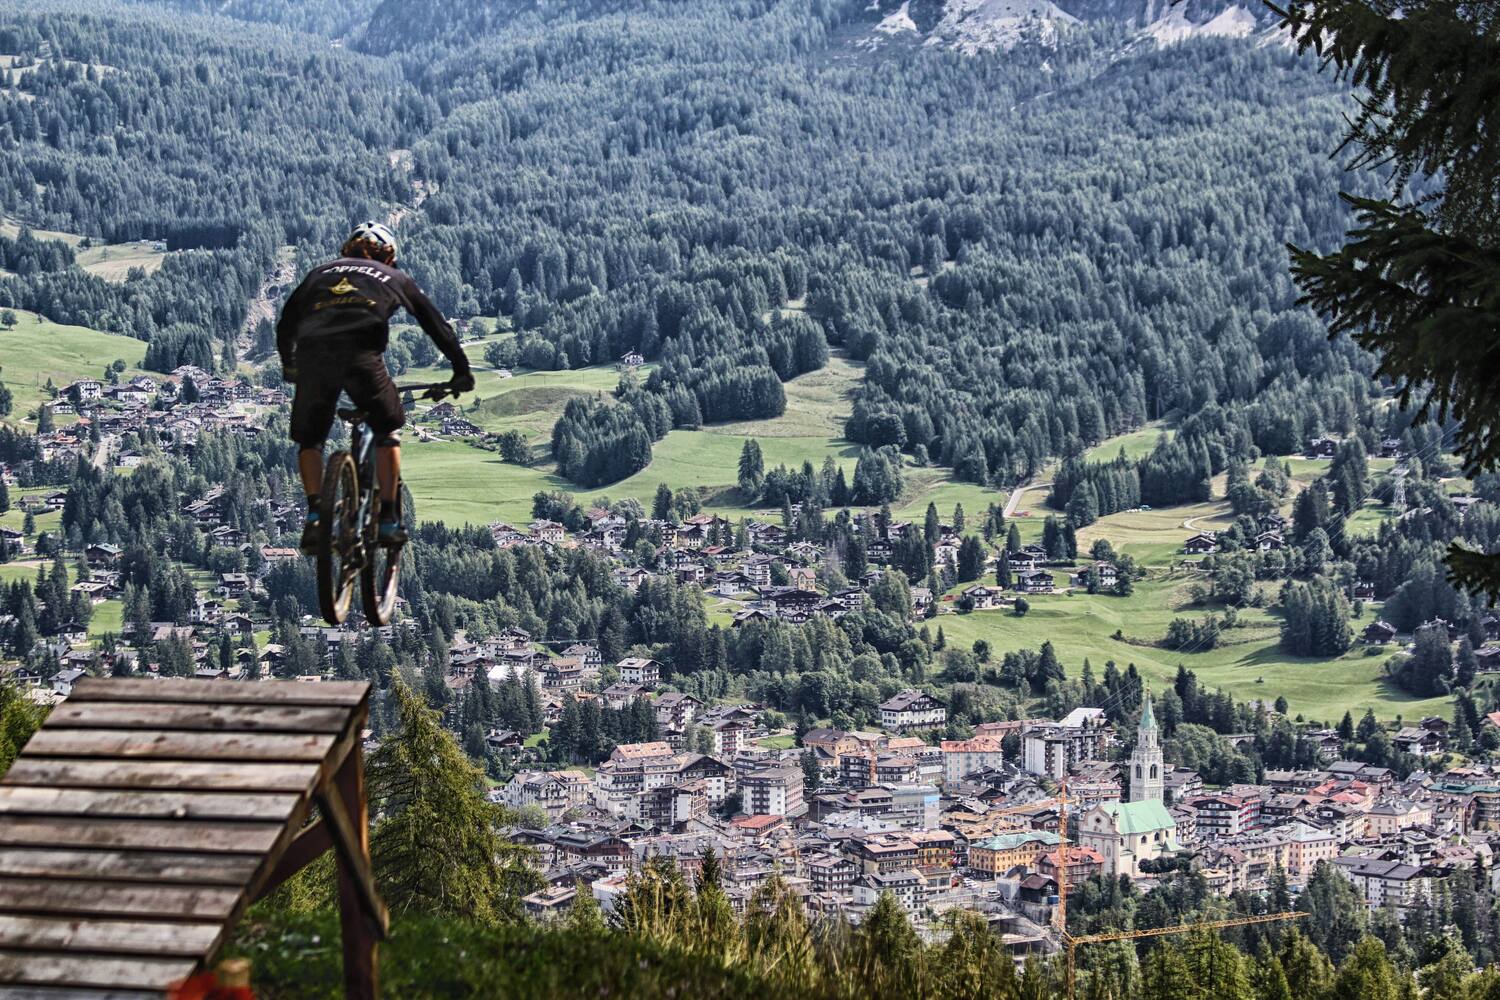 A Cortina l'estate è già iniziata, tra escursioni, mountain bike e relax